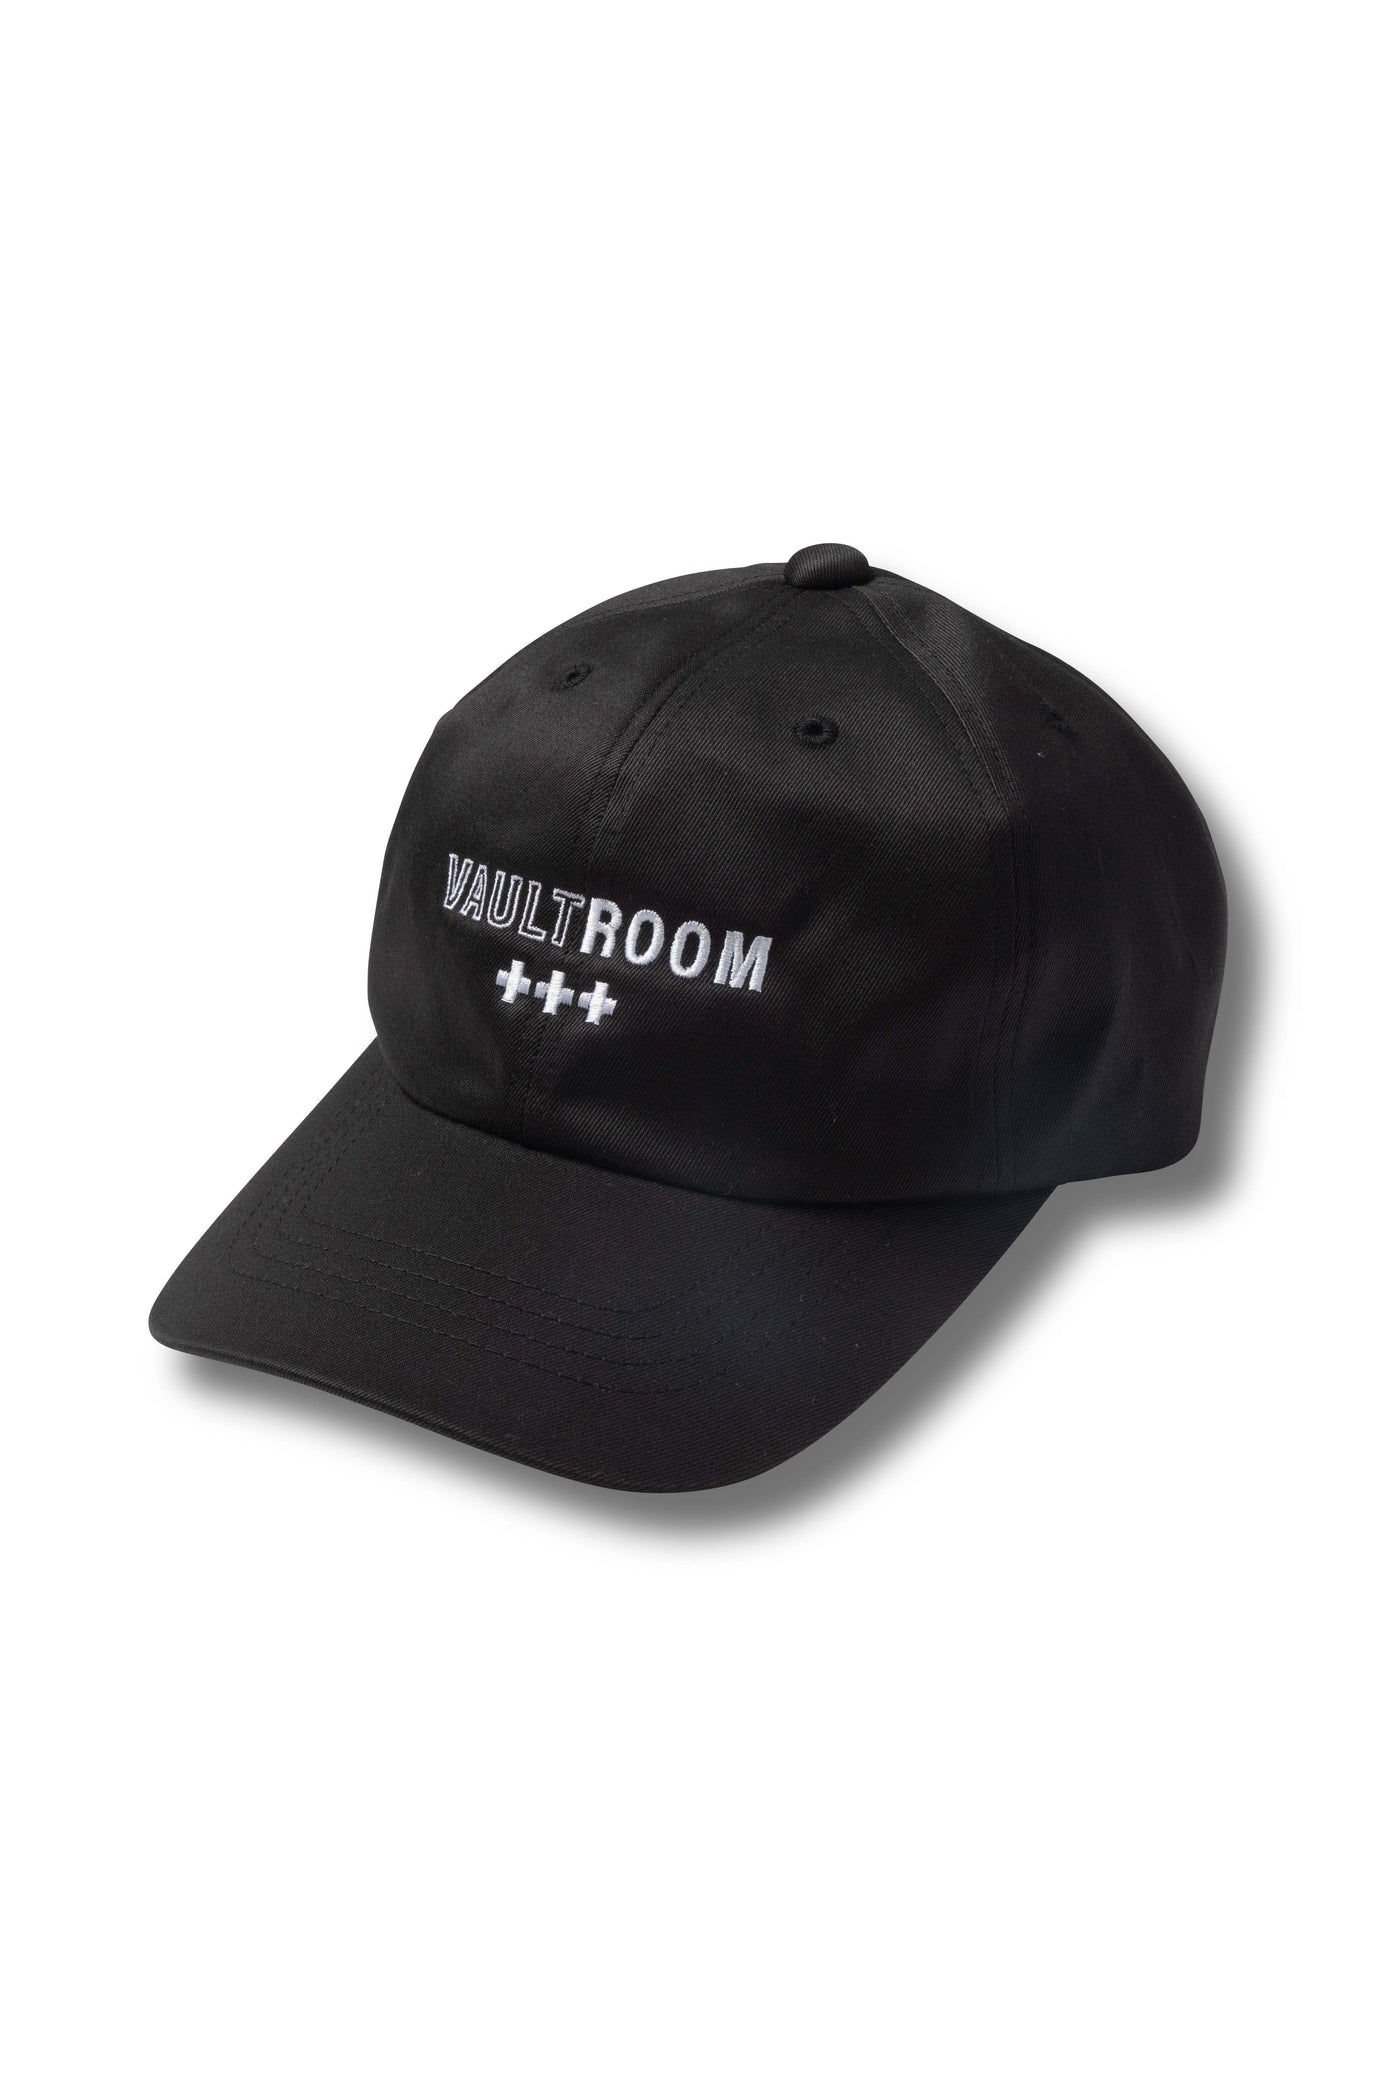 vaultroom community logo cap black 新品 - 帽子